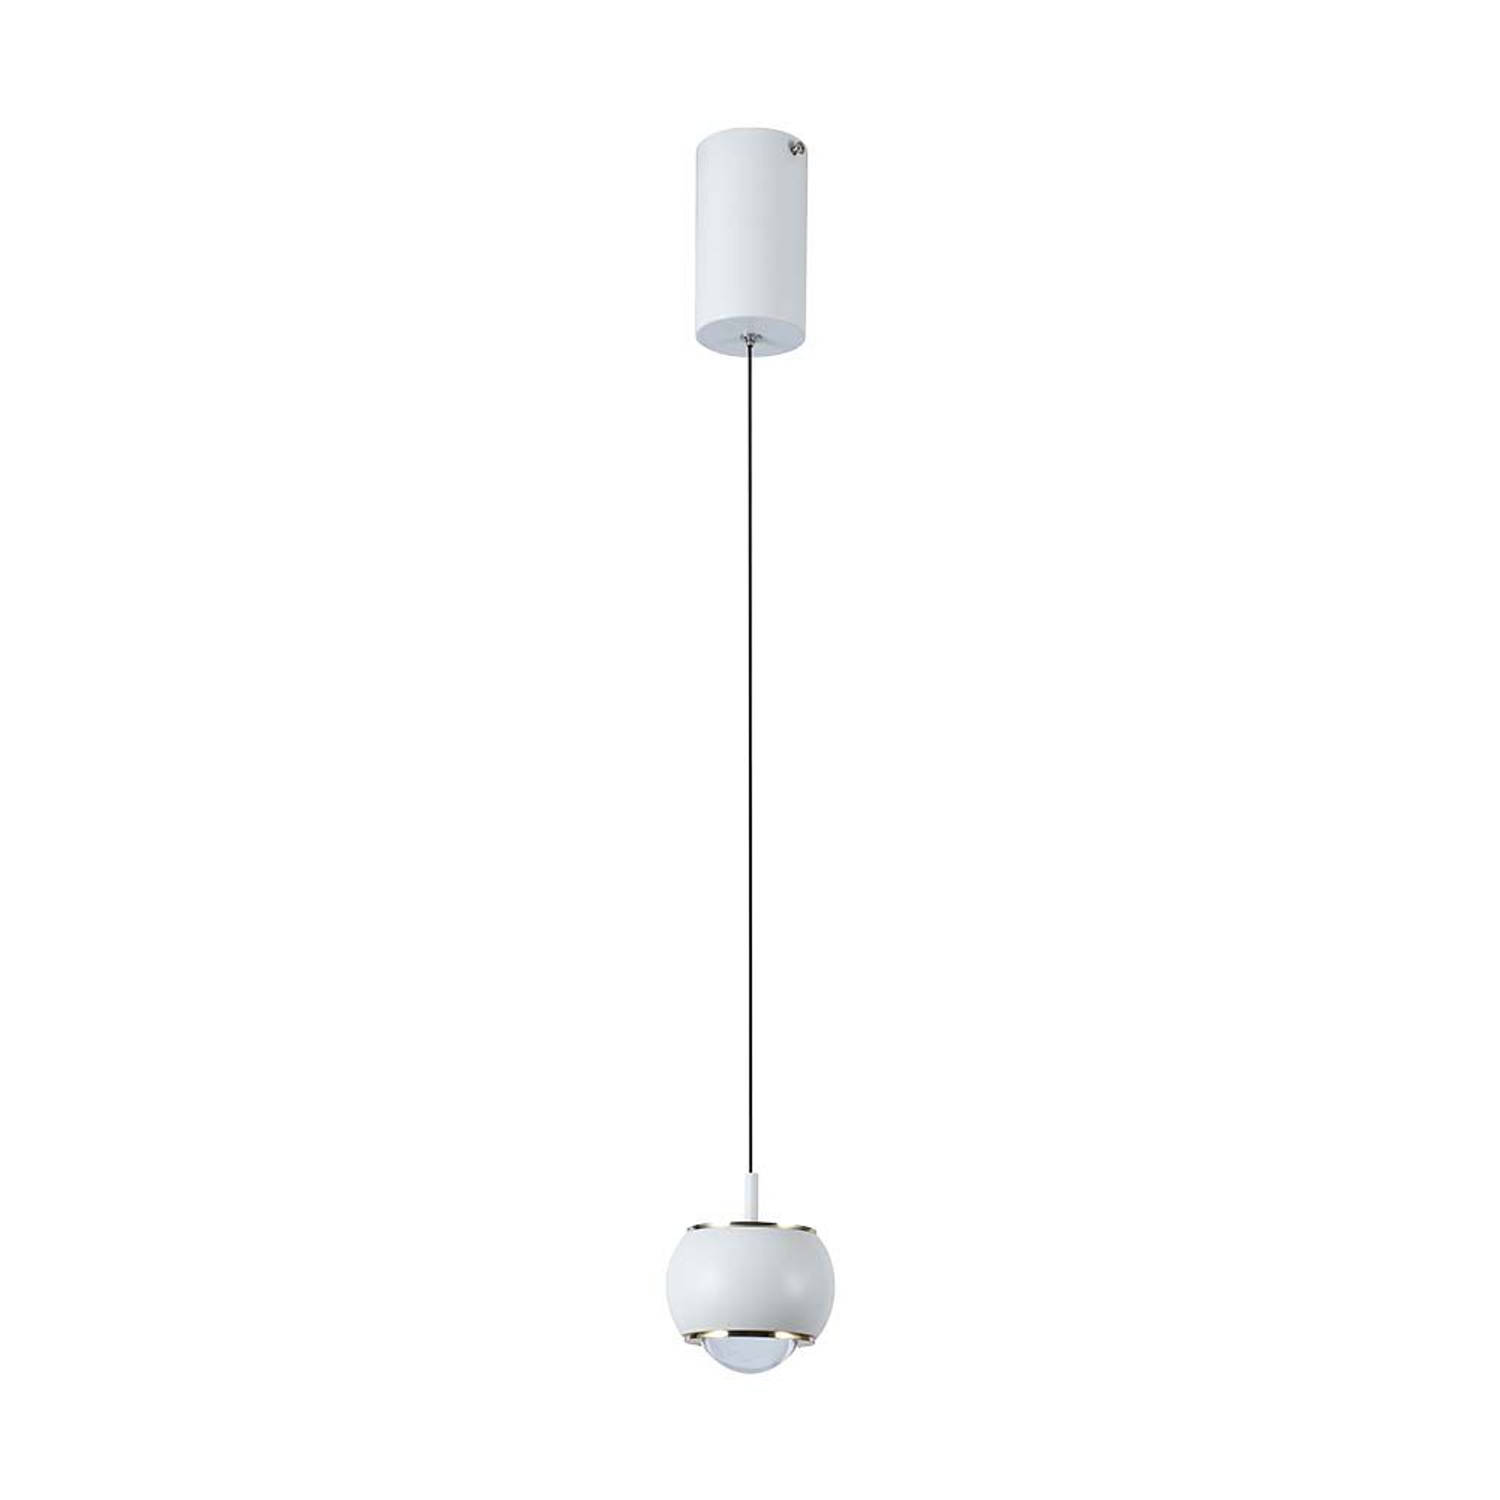 V-TAC VT-7830-W Designer plafondlampen - Designer hanglampen - IP20 - Wit lamphuis - 9 Watt - 1000 Lumen - 4000K